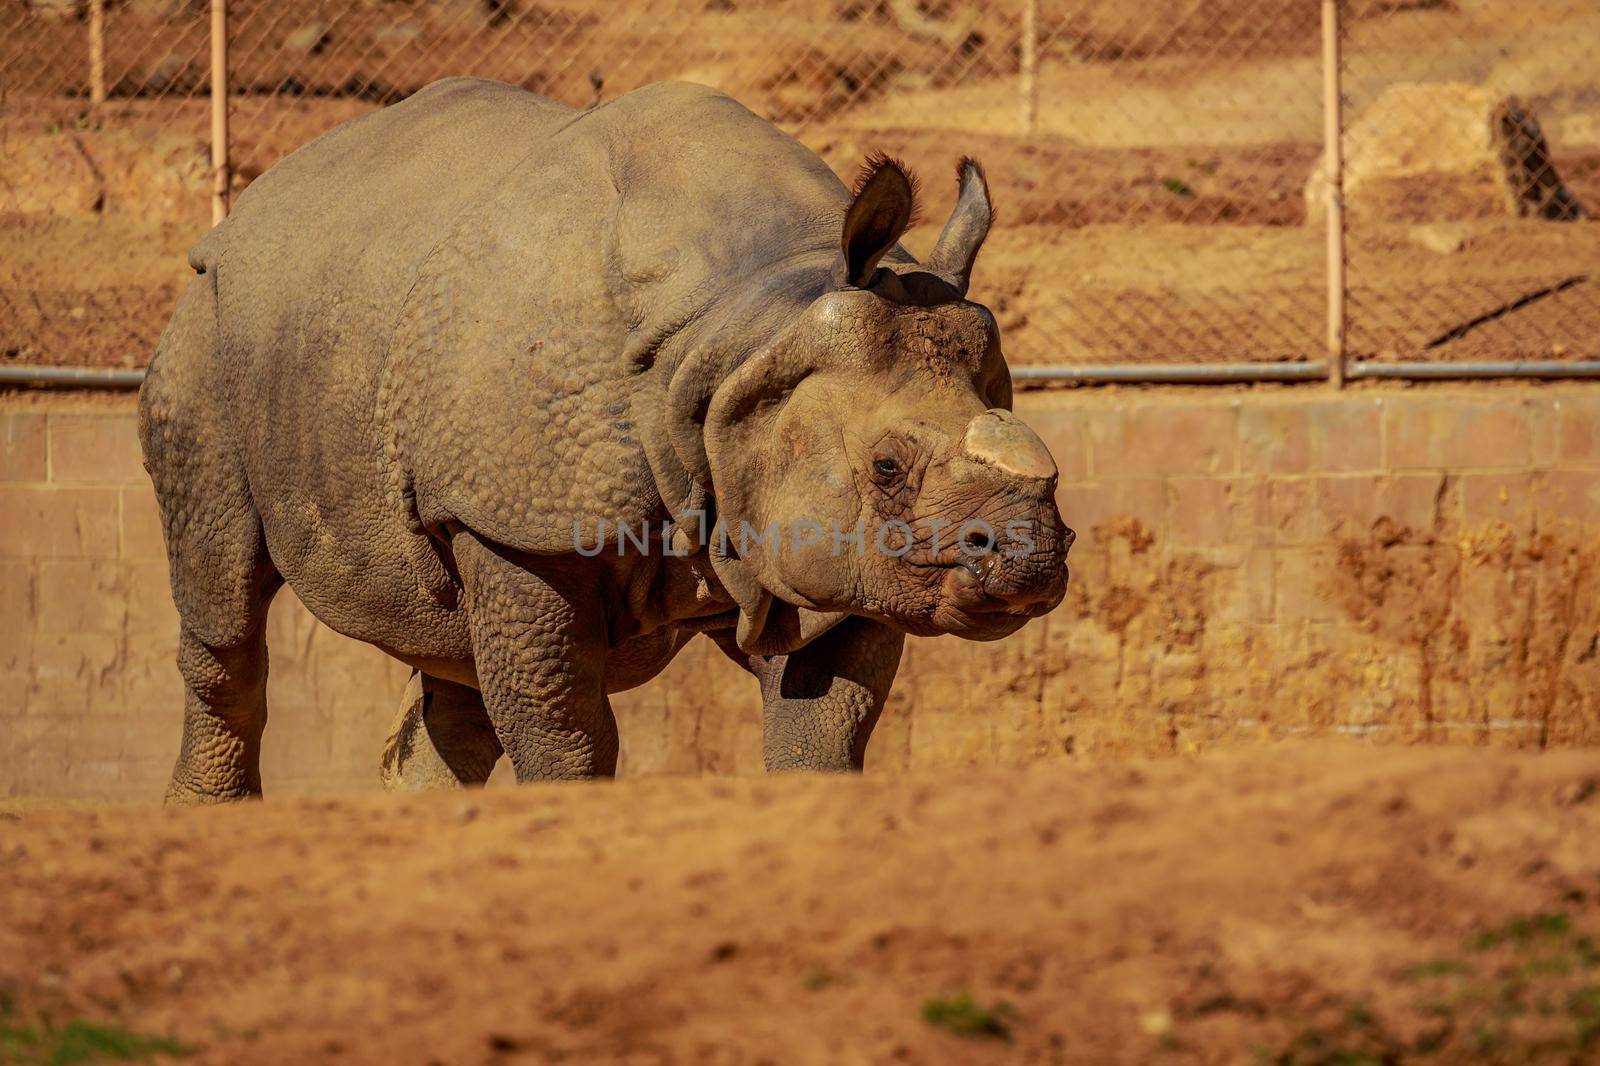 Single Indian Rhinoceros walks in the park